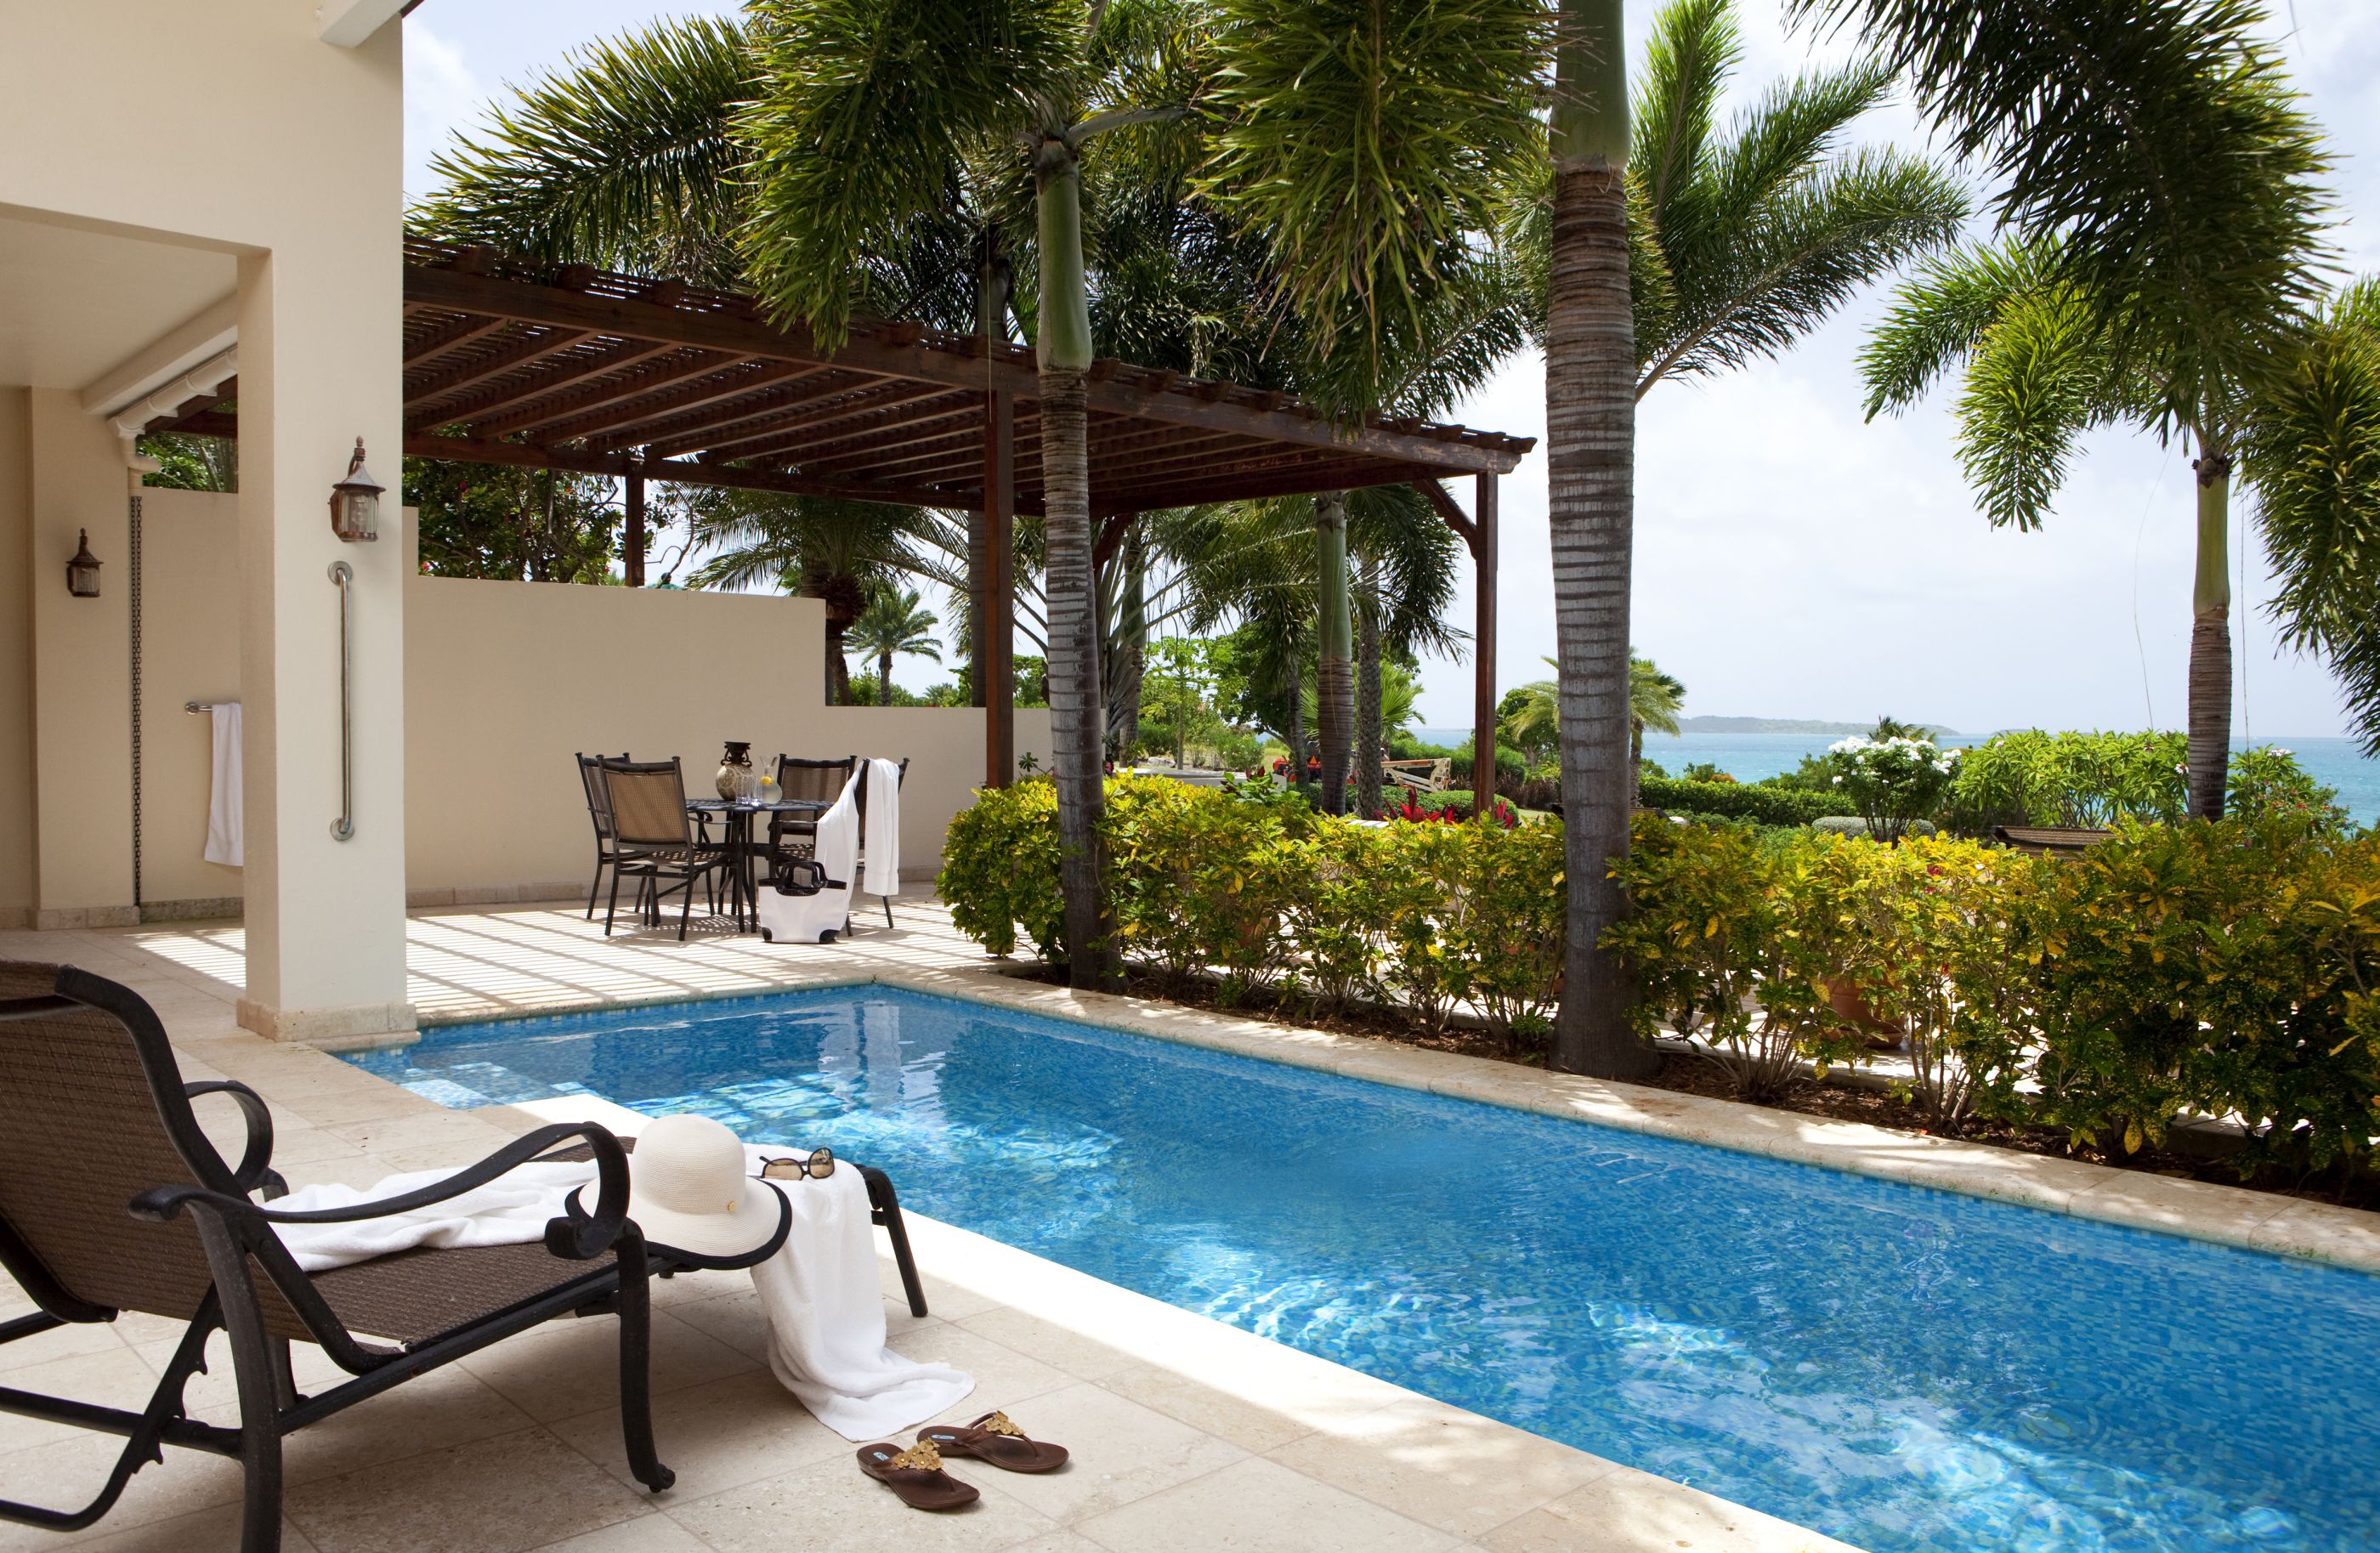 Antigua pool of Palm Point, Antigua